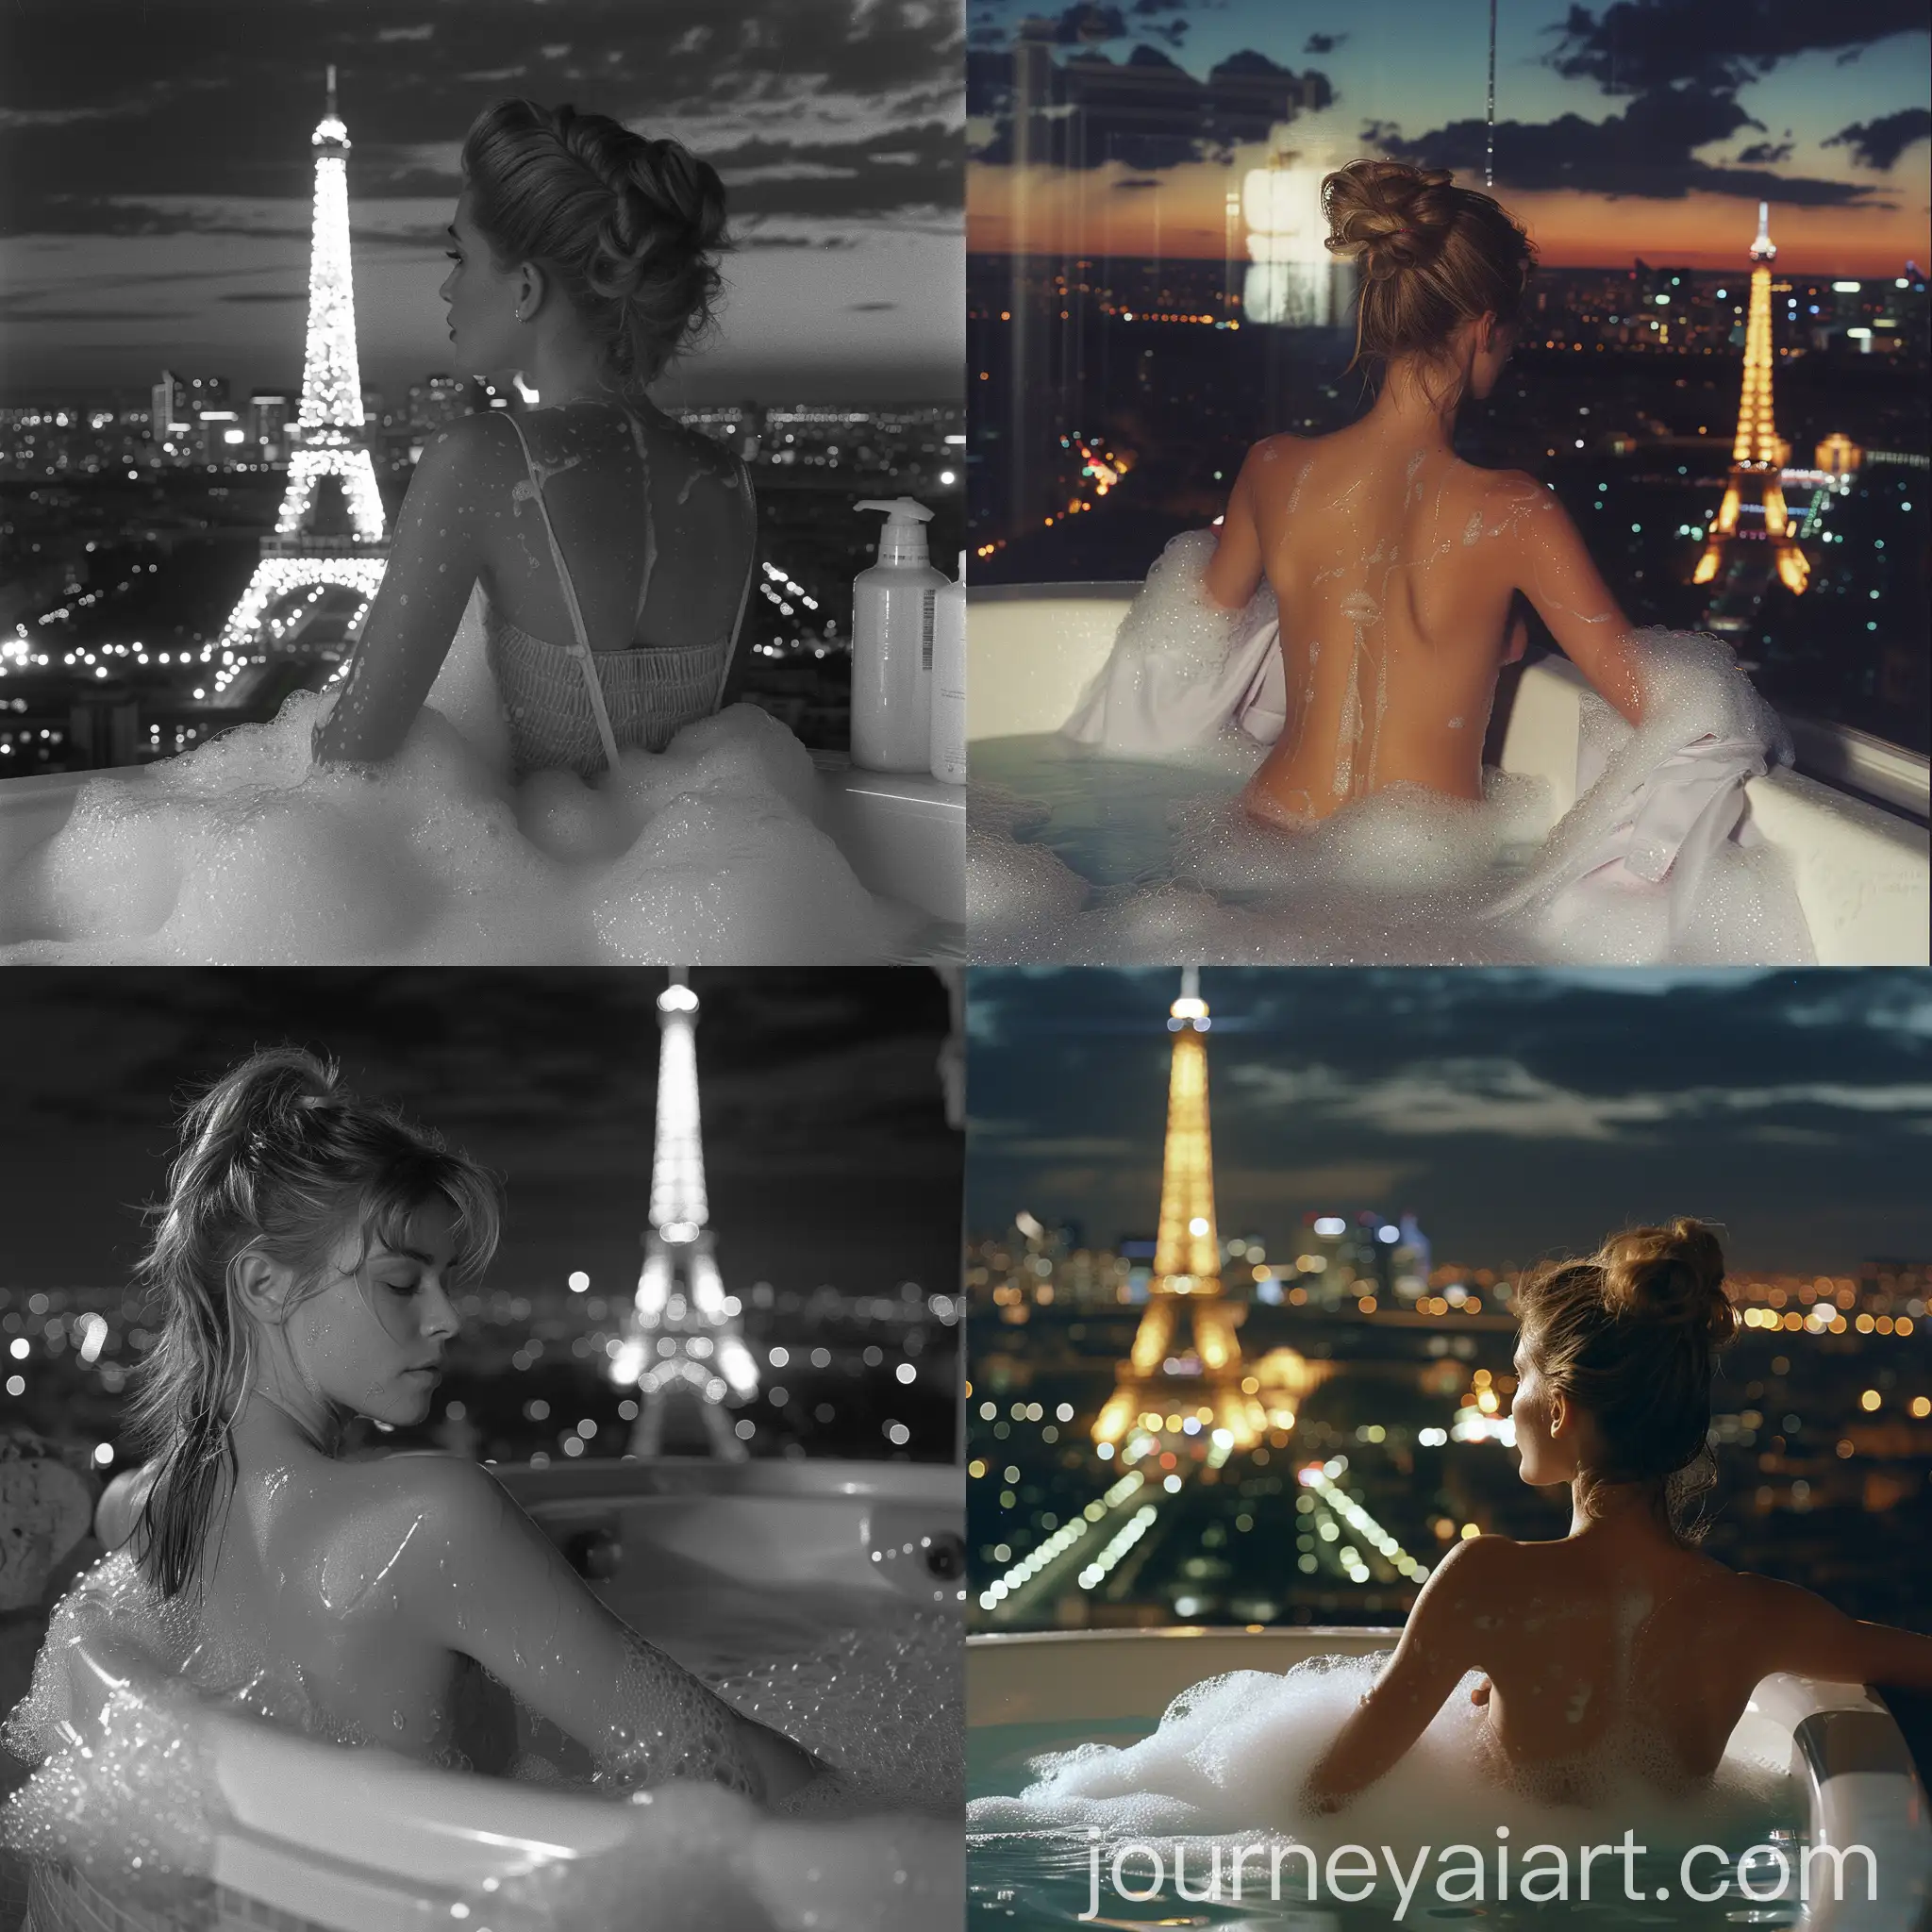 Vintage-1980s-Style-Victorias-Secret-Model-in-Paris-Night-Bath-Scene